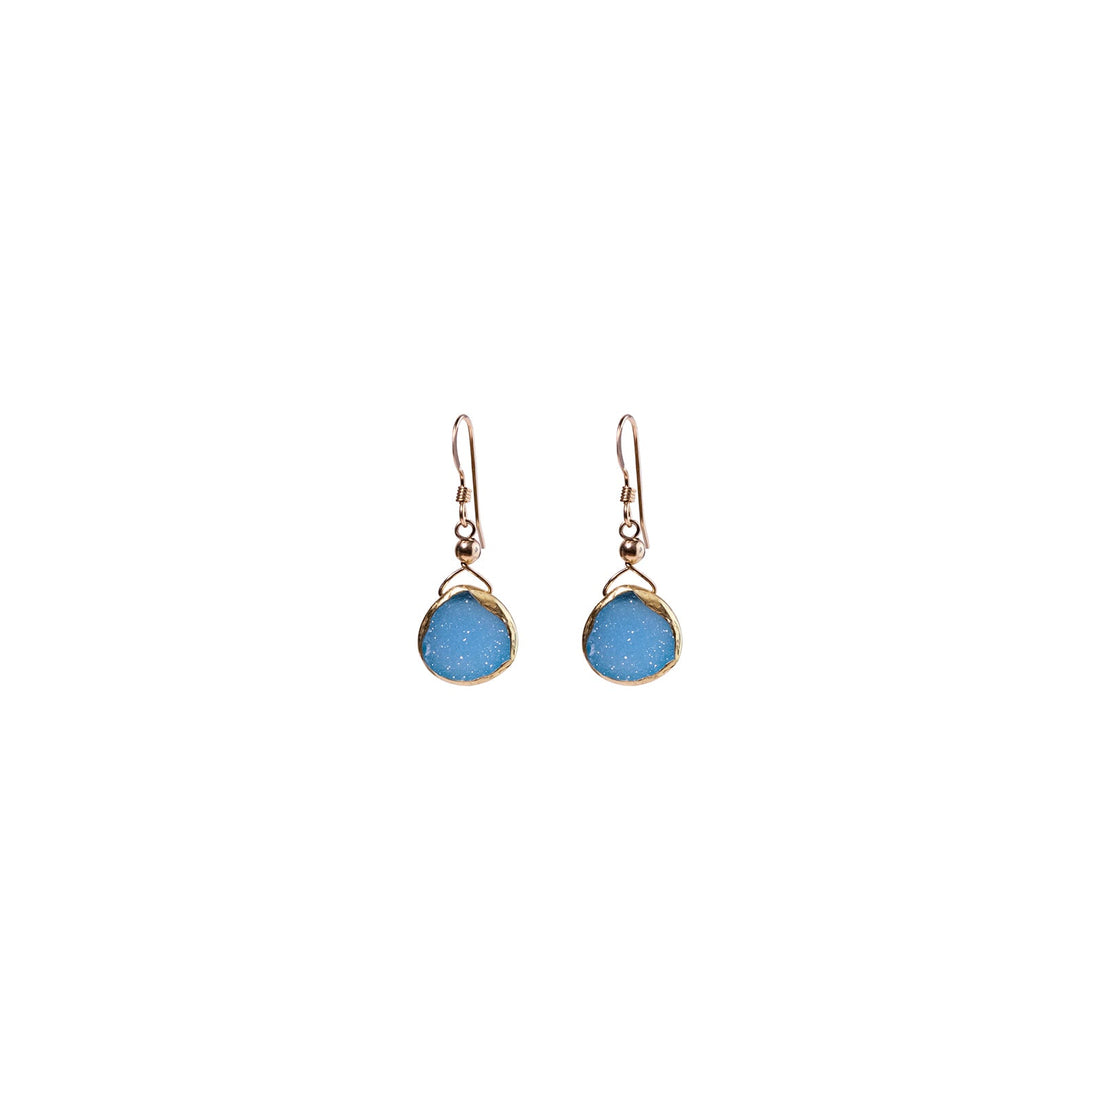 Julianna Earrings with Blue Druzy in Gold, Classic Pear Cut Earrings Sayulita Sol 